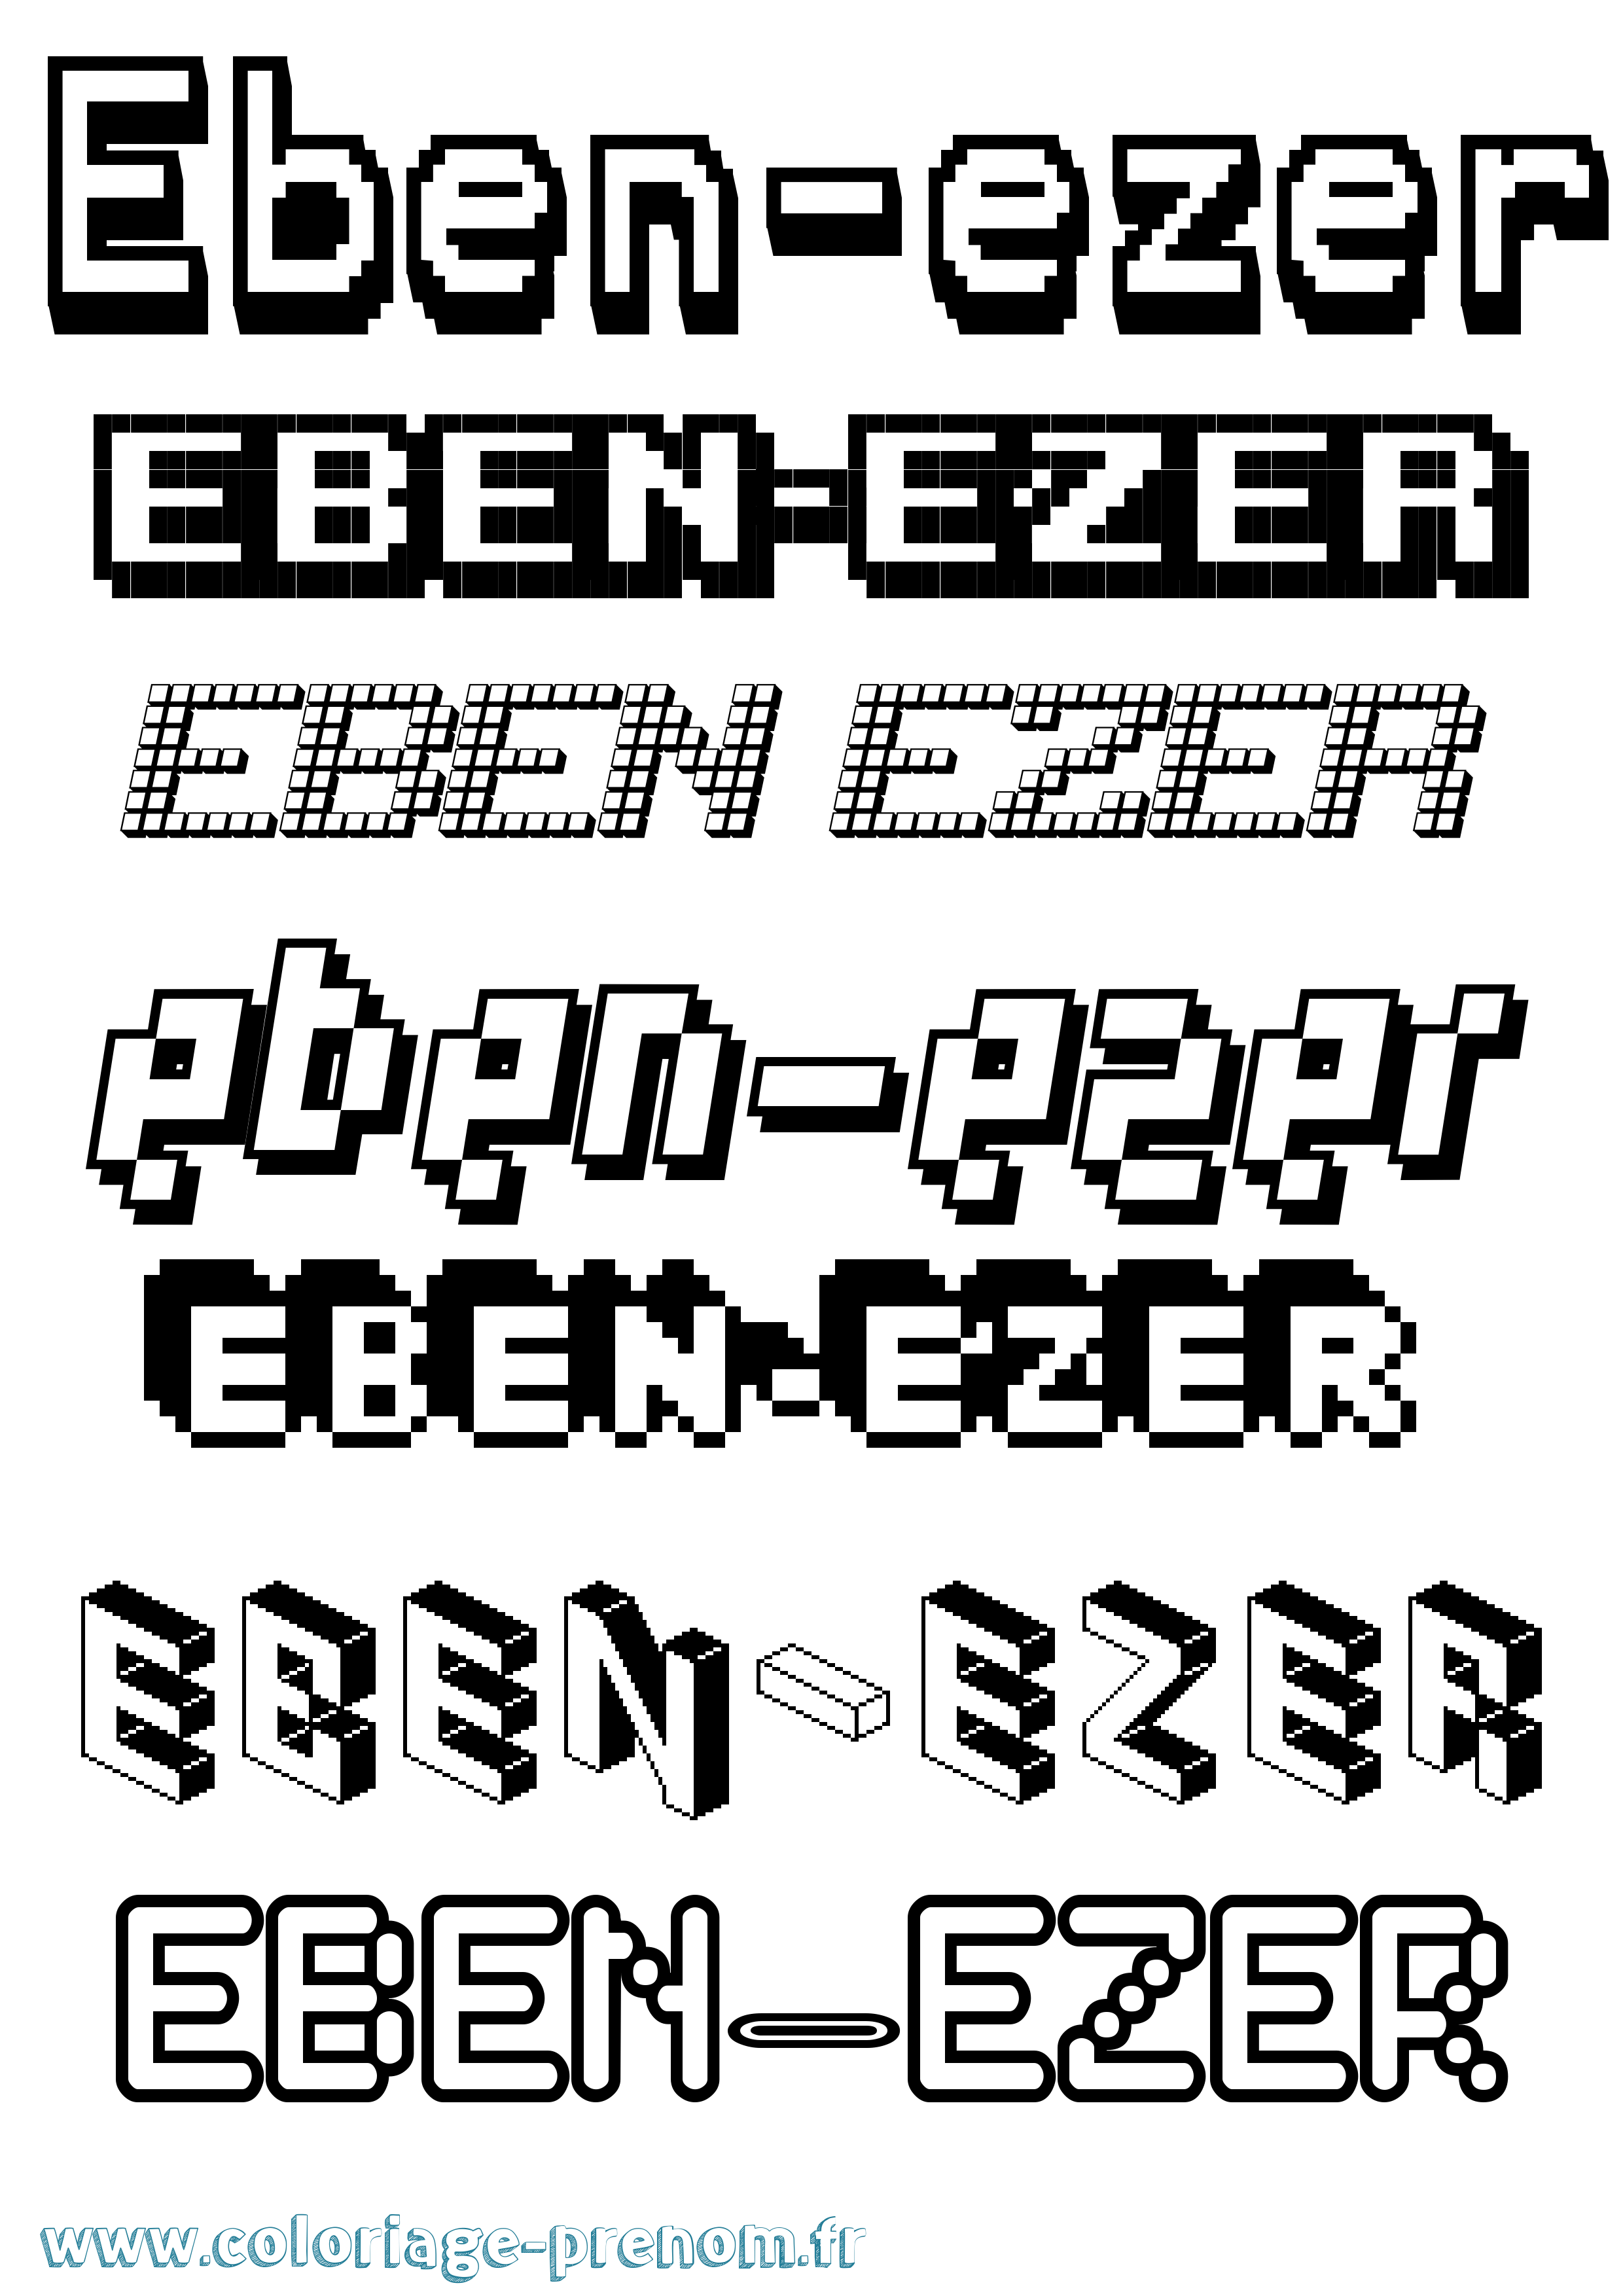 Coloriage prénom Eben-Ezer Pixel